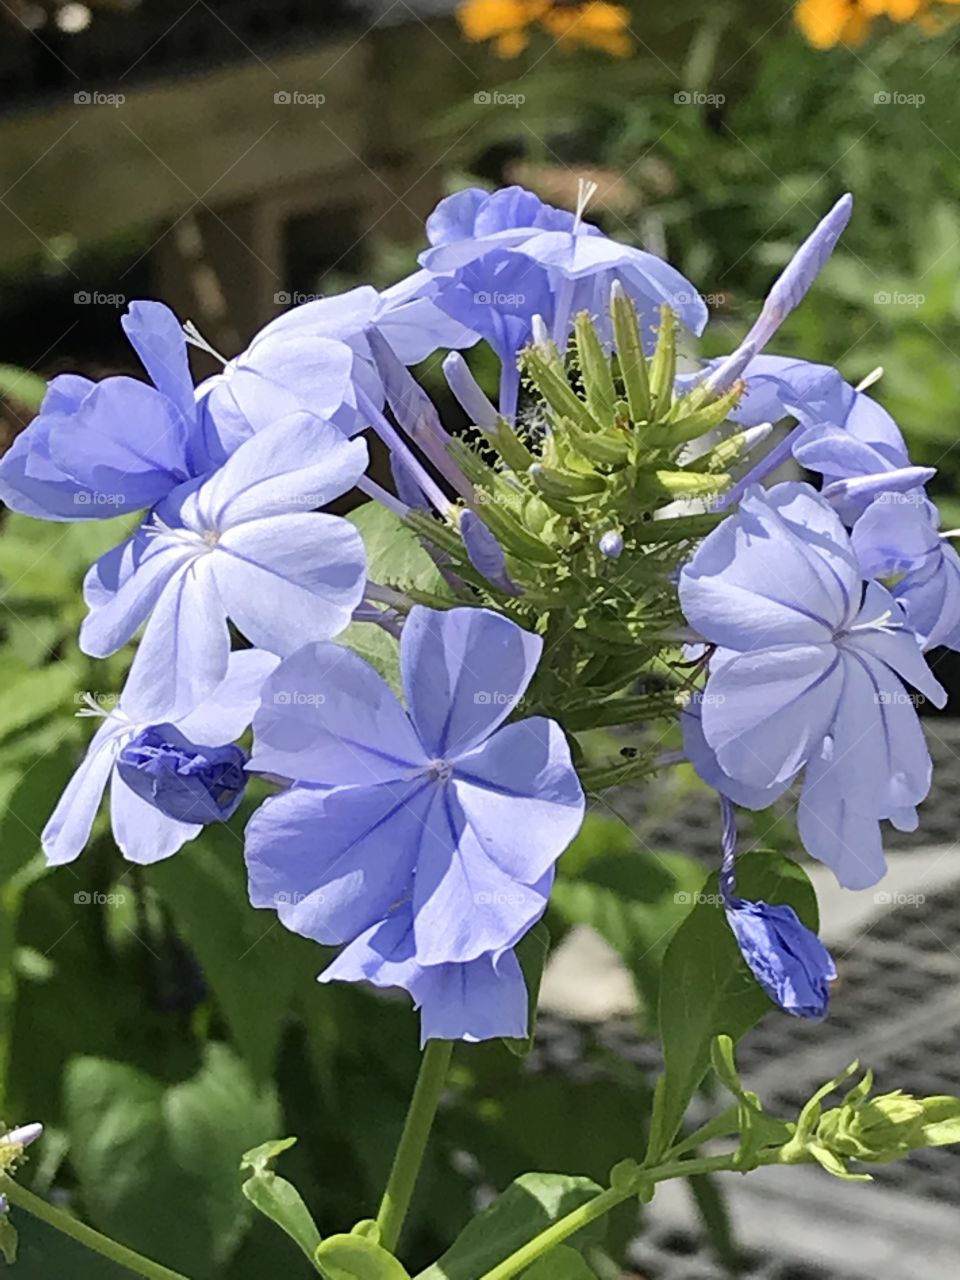 Purplish blue flower cluster